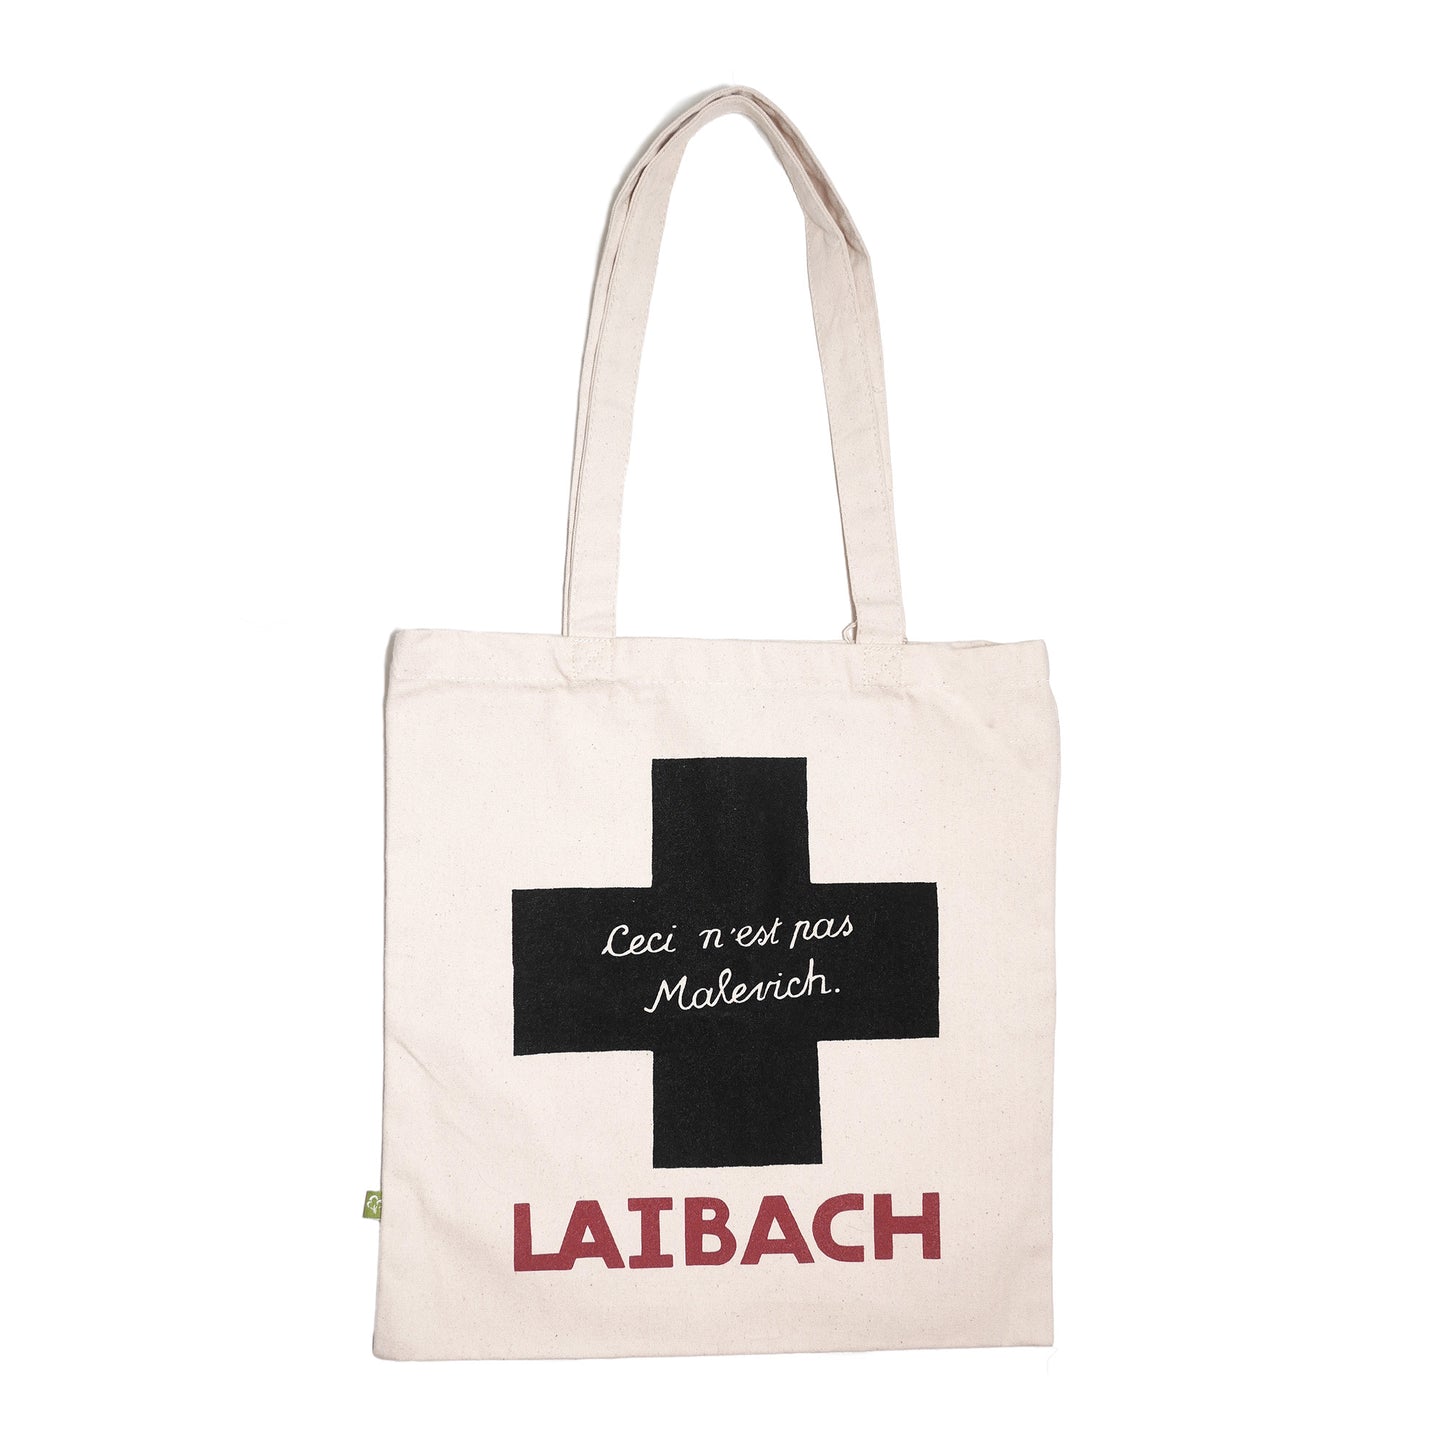 Laibach Bag (Steal or Barrow)